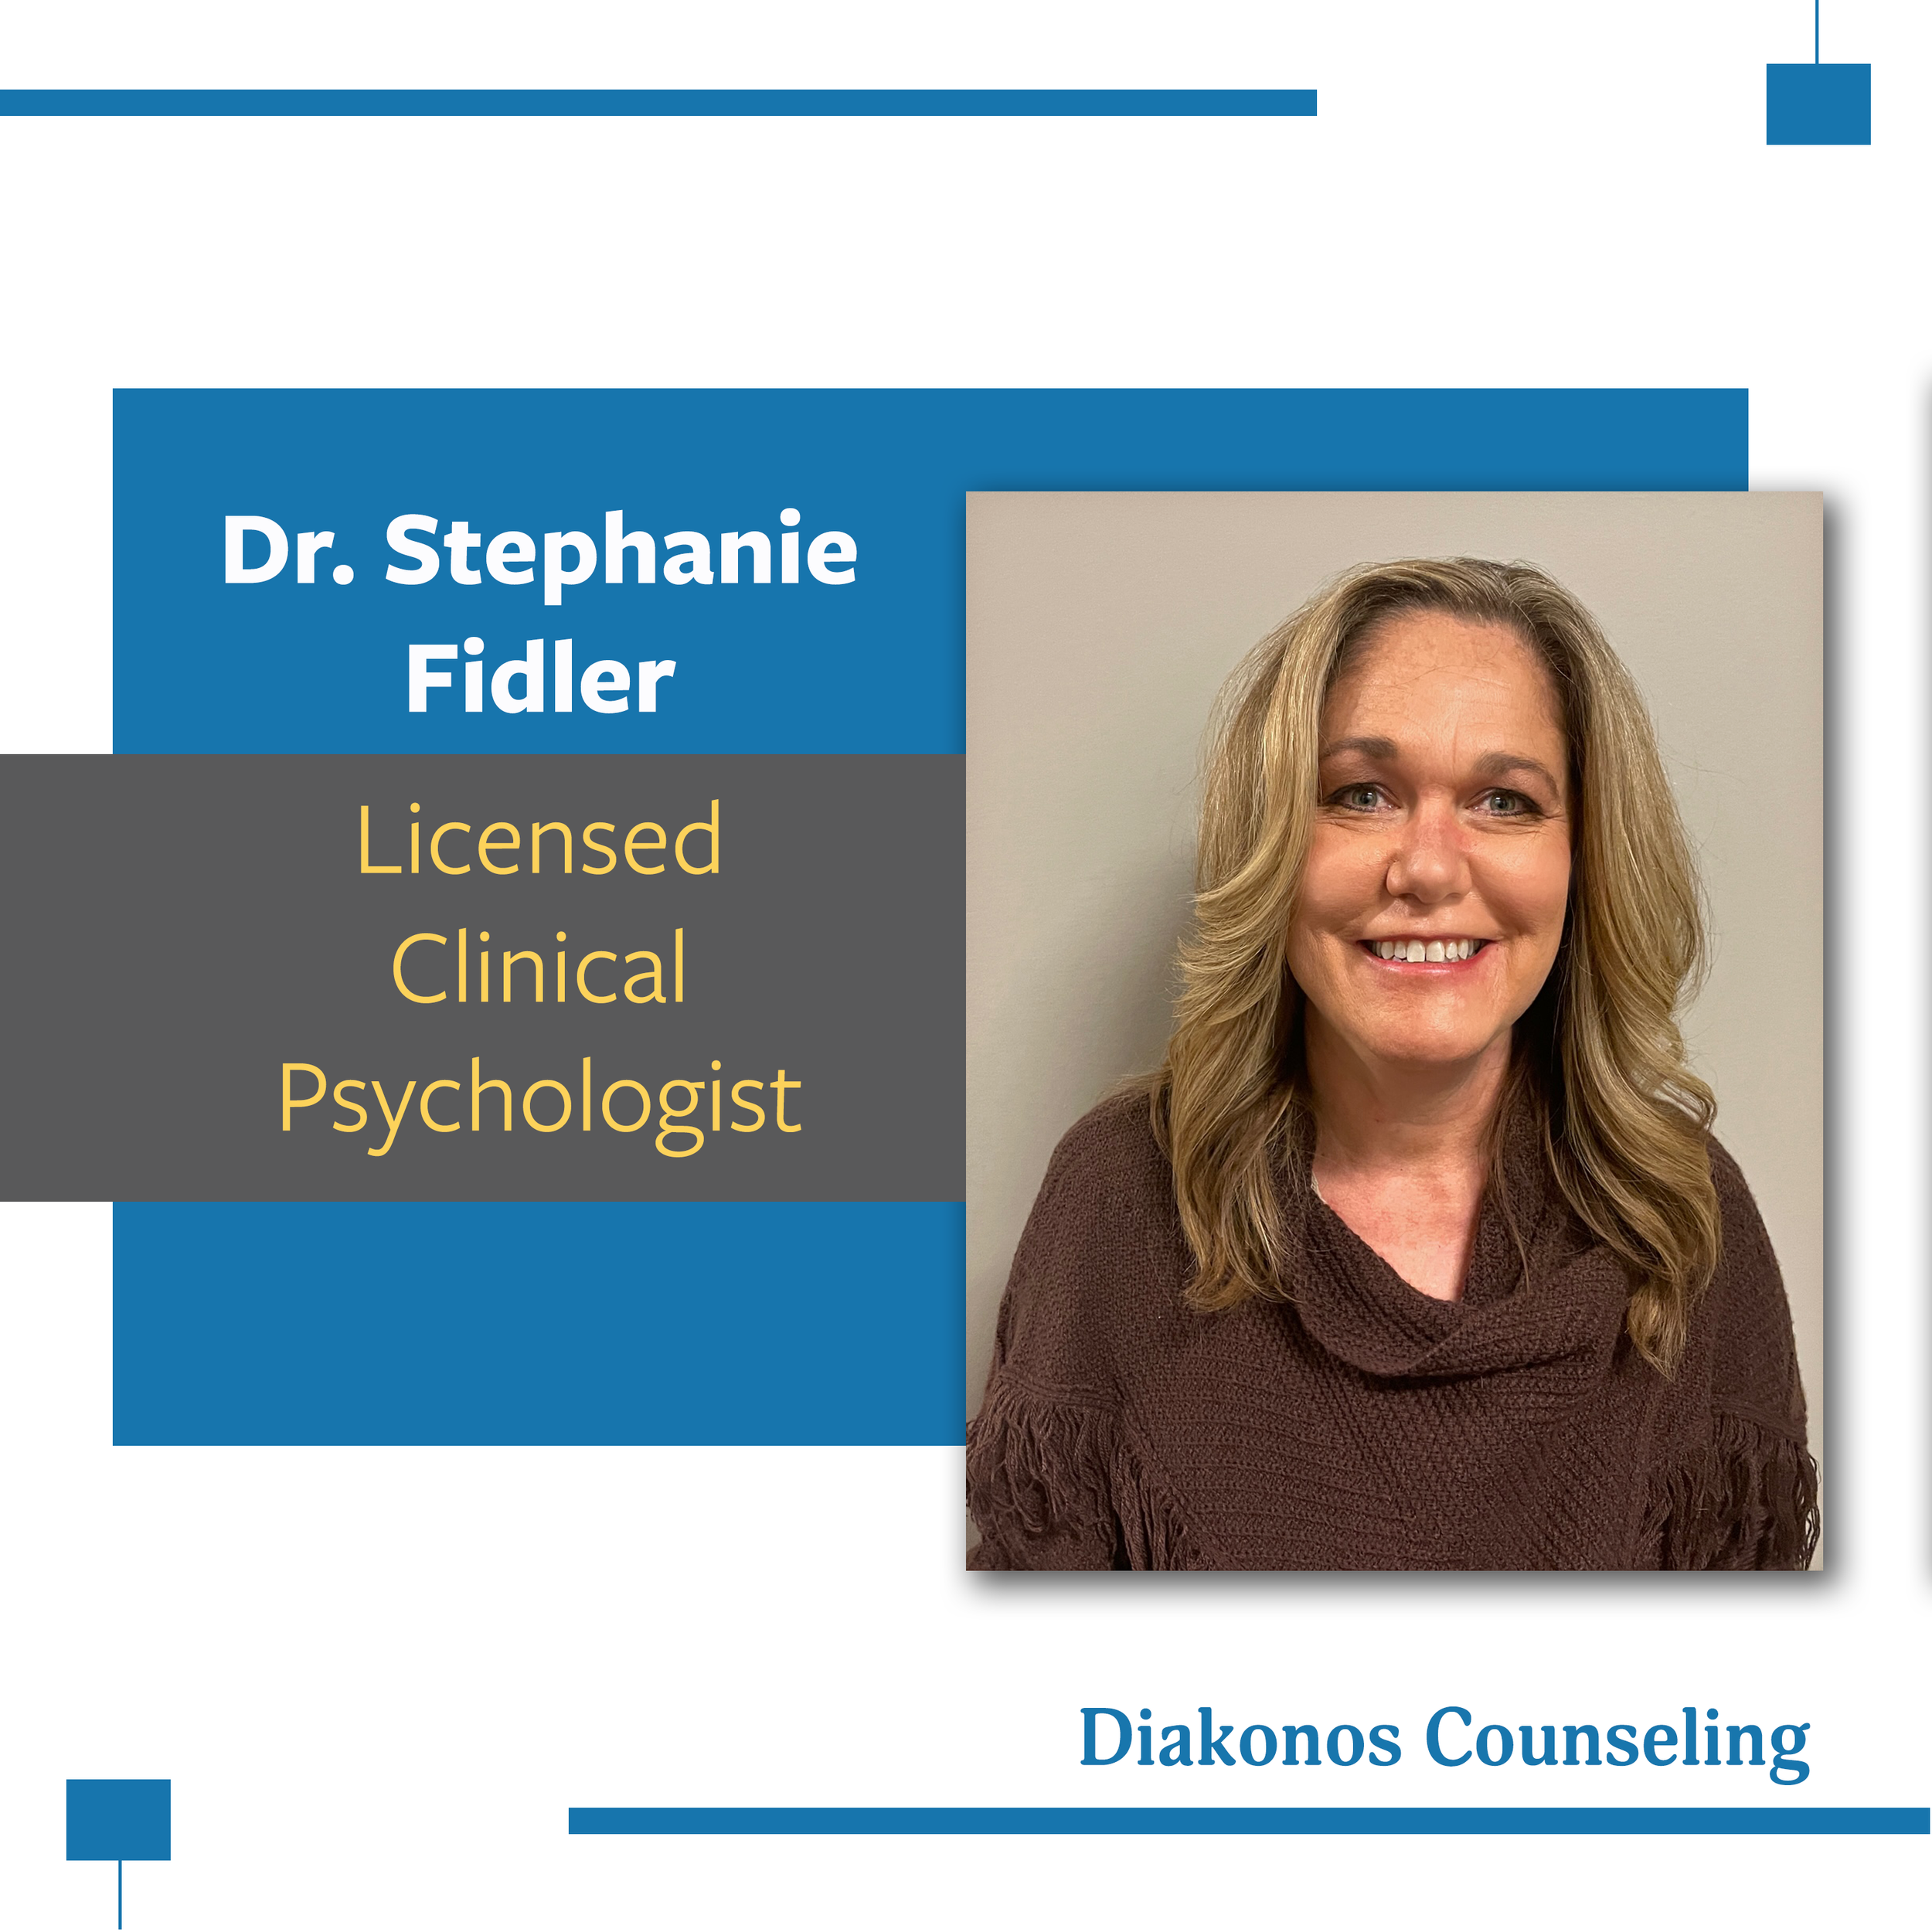 Stephanie Fidler Psychologist Diakonos Counseling Kansas City.png